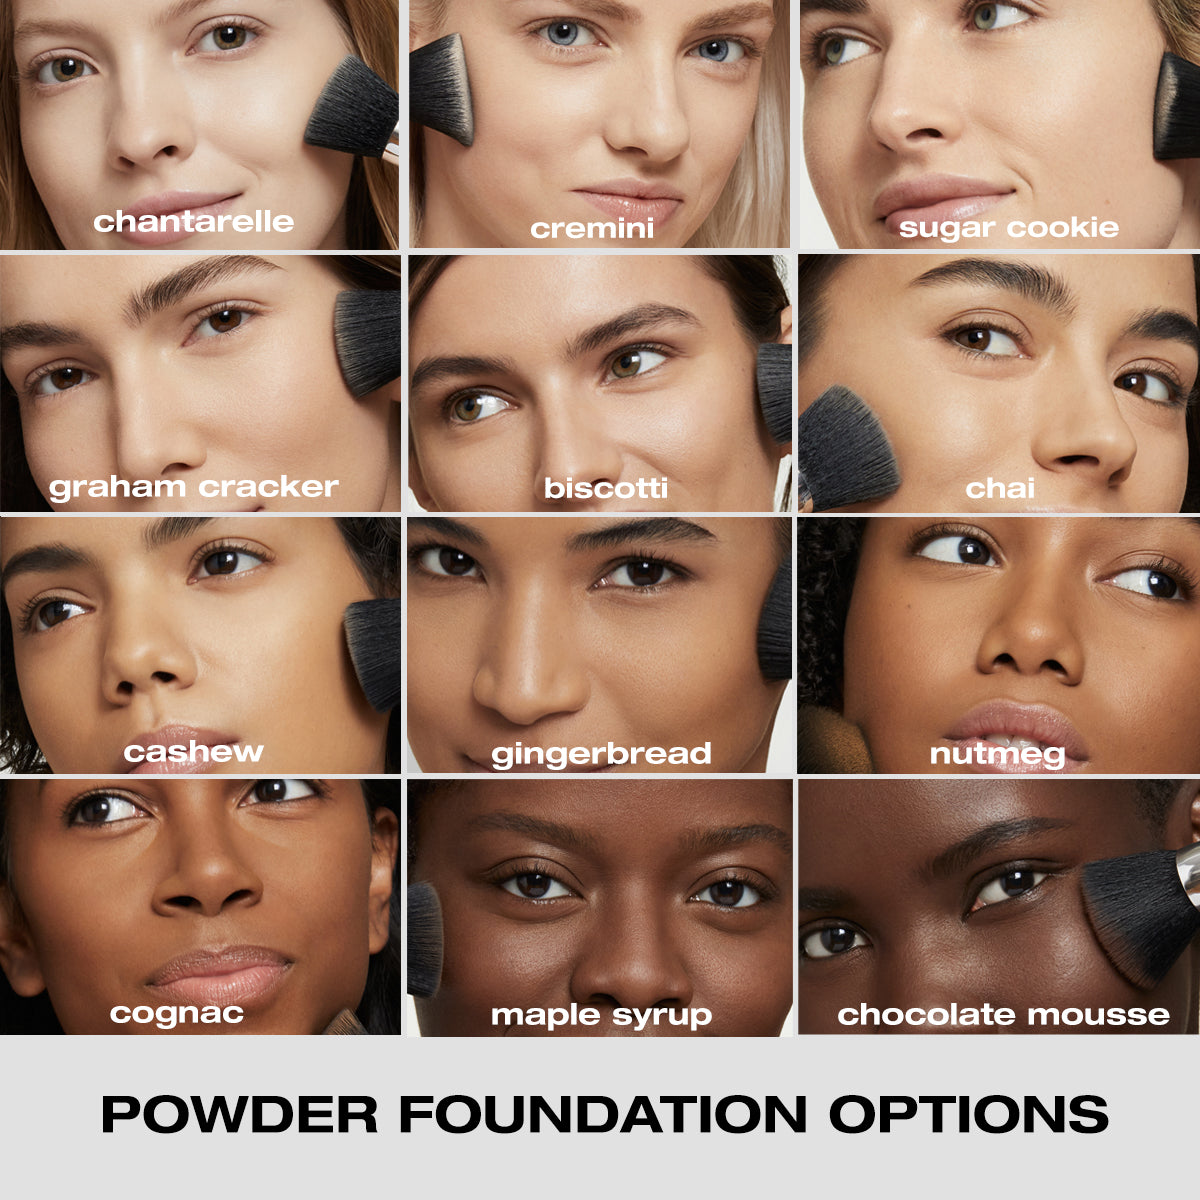 Powder foundation options from lightest to darkest: Chantarelle, cremini, sugar cookie, graham cracker, biscotti, chai, cashew, gingerbread, nutmeg, cognac, maple syrup, chocolate mousse